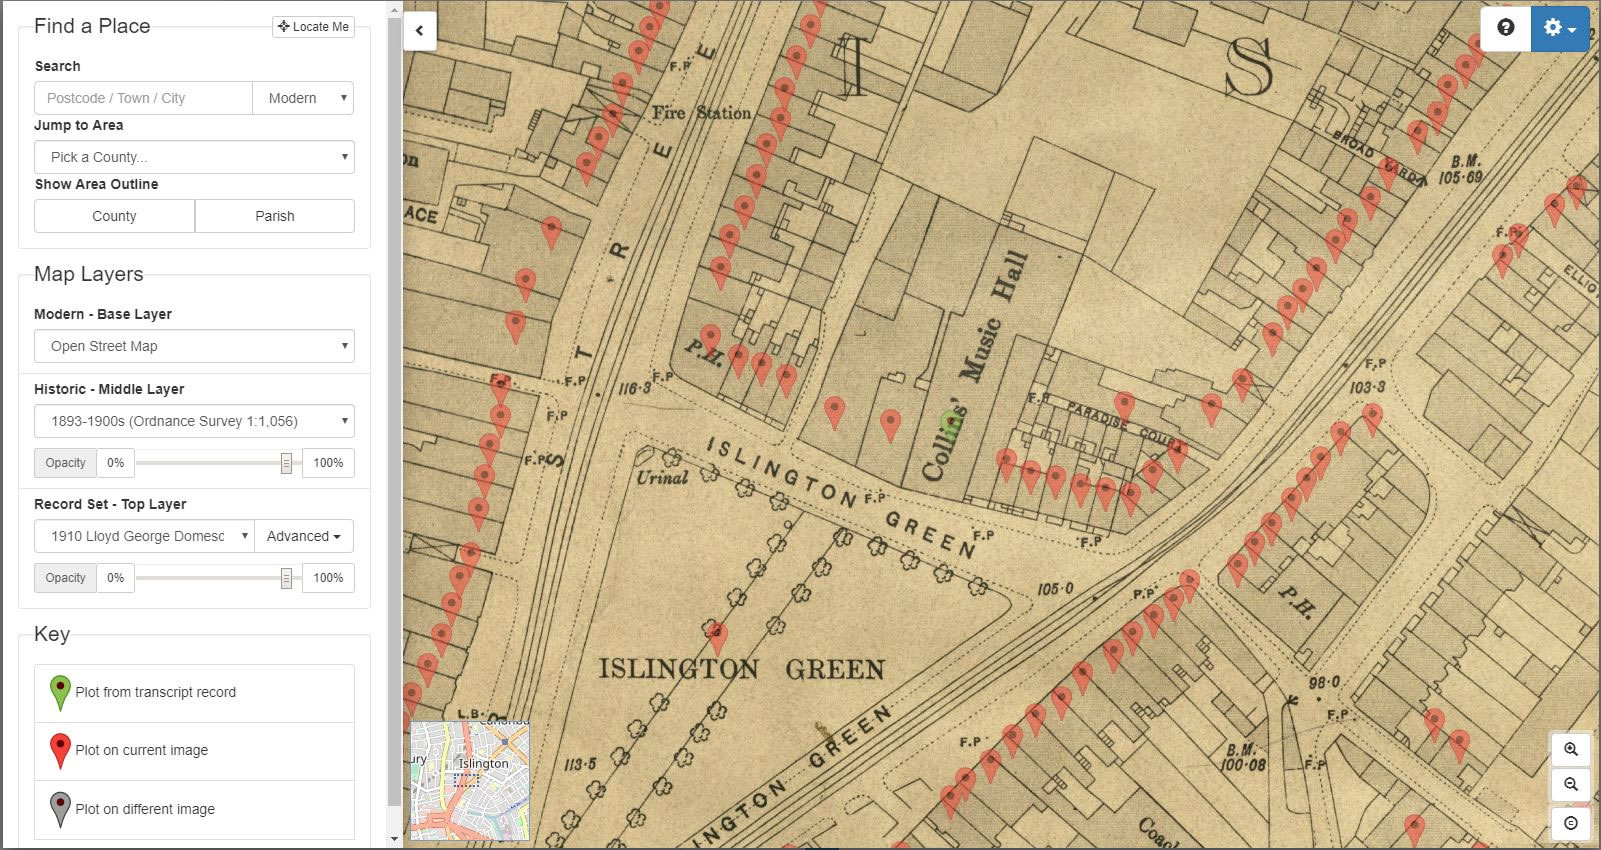 IR58 map of Islington Green on TheGenealogist's Map Explorer